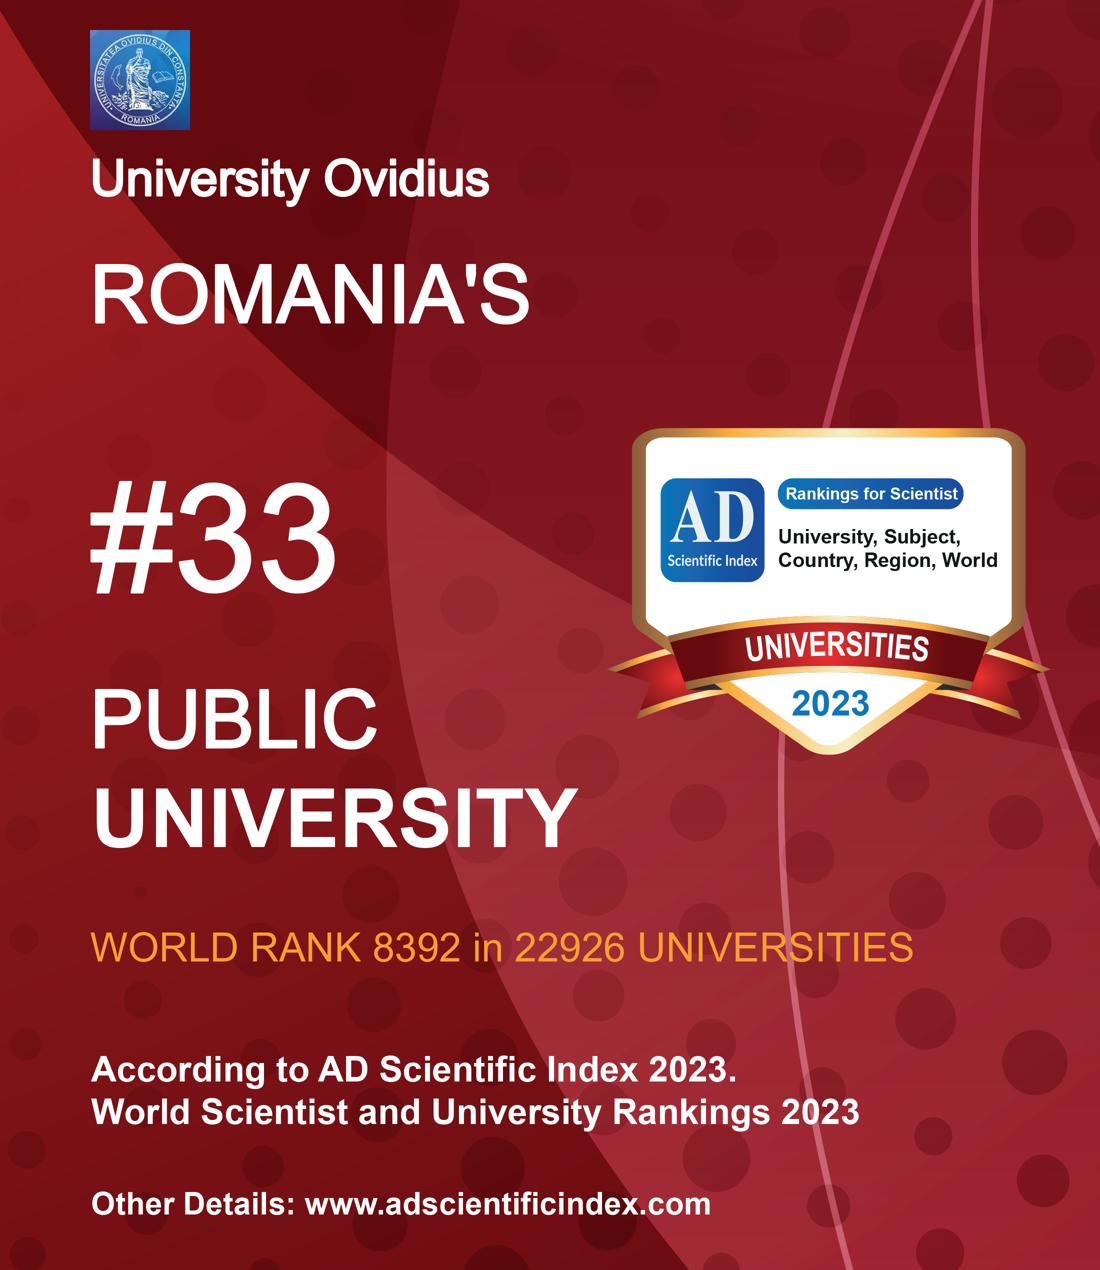 University Ovidius